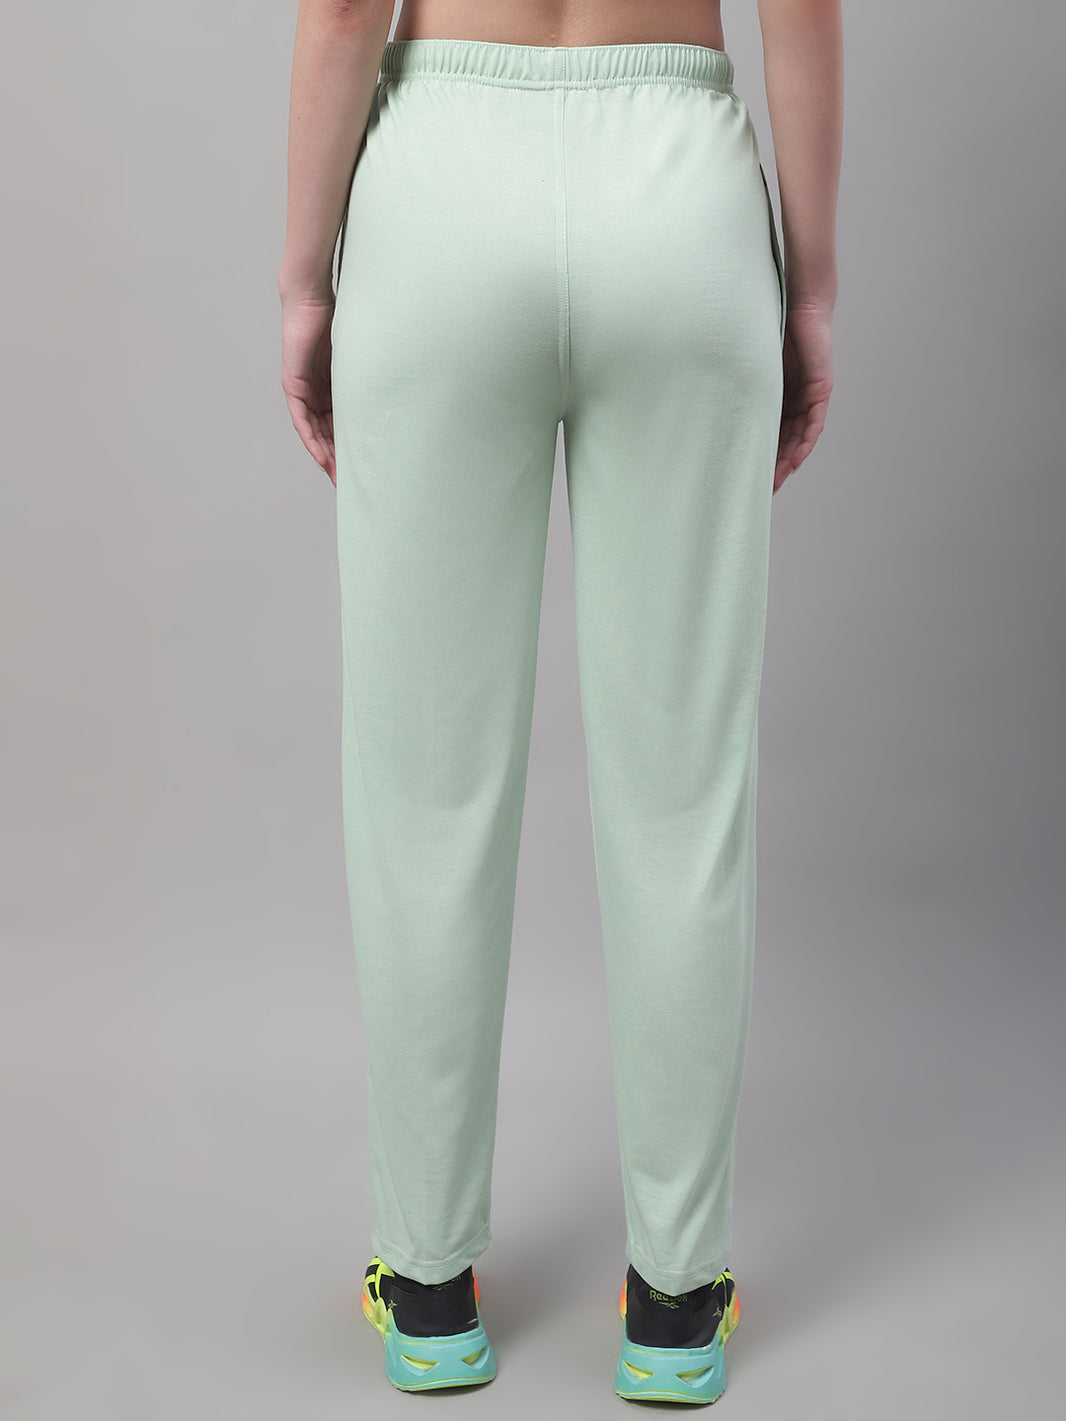 Vimal Jonney Light Green Regular fit Cotton Trackpant for Women(Zip On 1 Side Pocket)